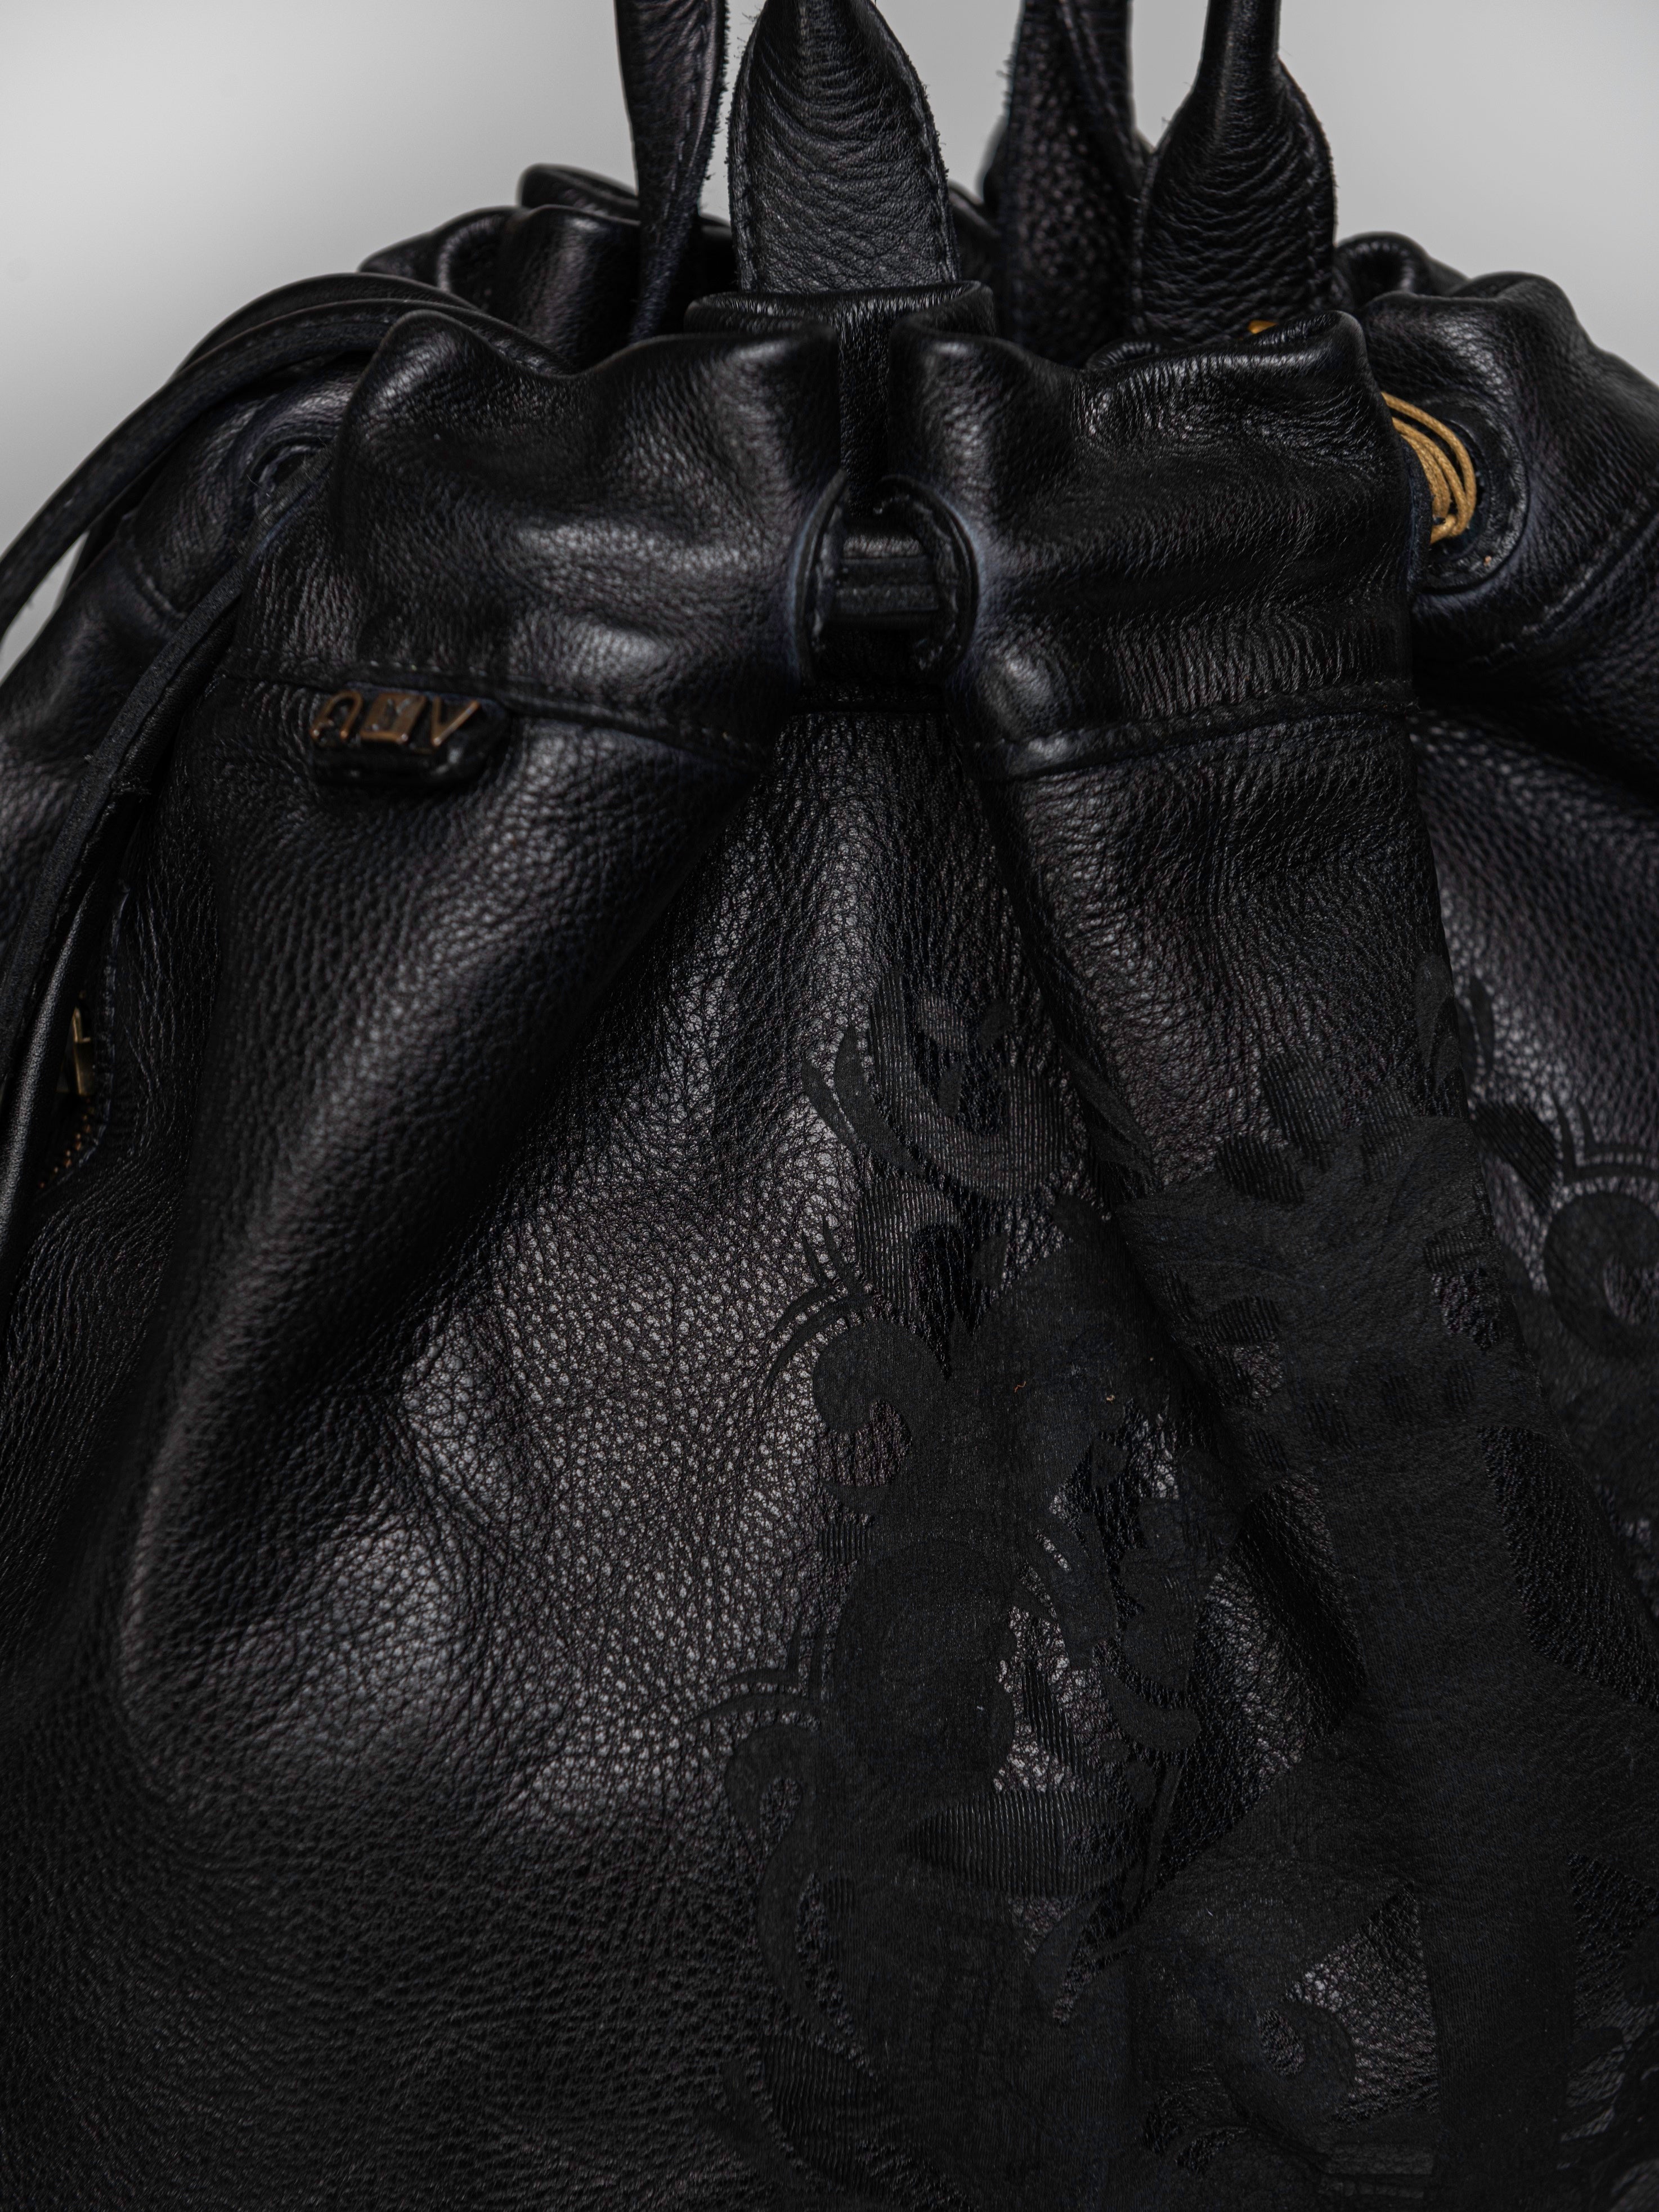 VITIS: Black leather backpack bag by Art N Vintage